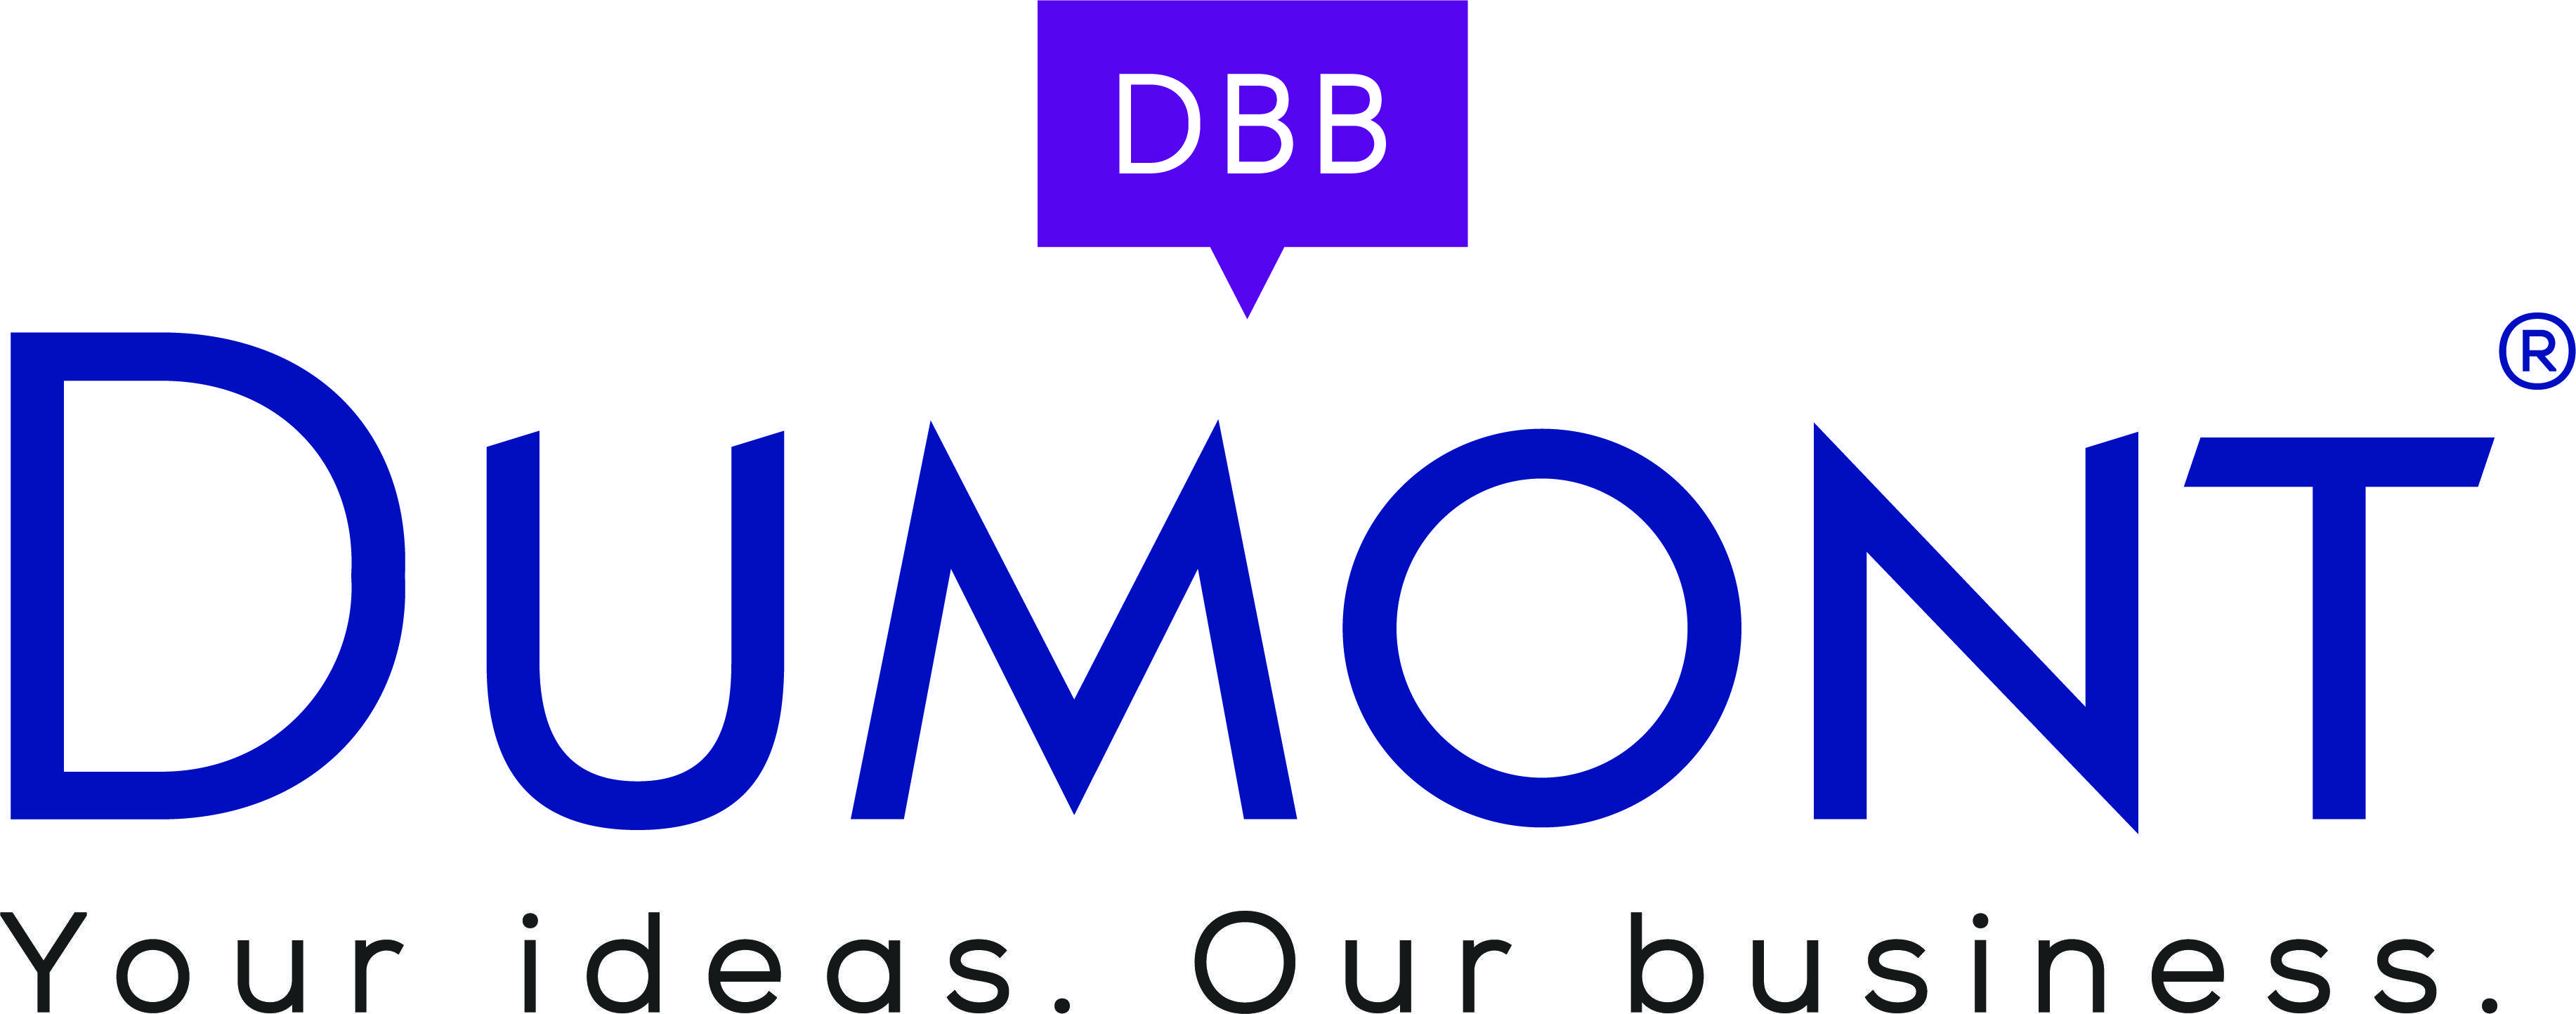 Dumont Logo - DUMONT-2017-LOGO-HIGH-RESOLUTION - Patent Lawyer Magazine